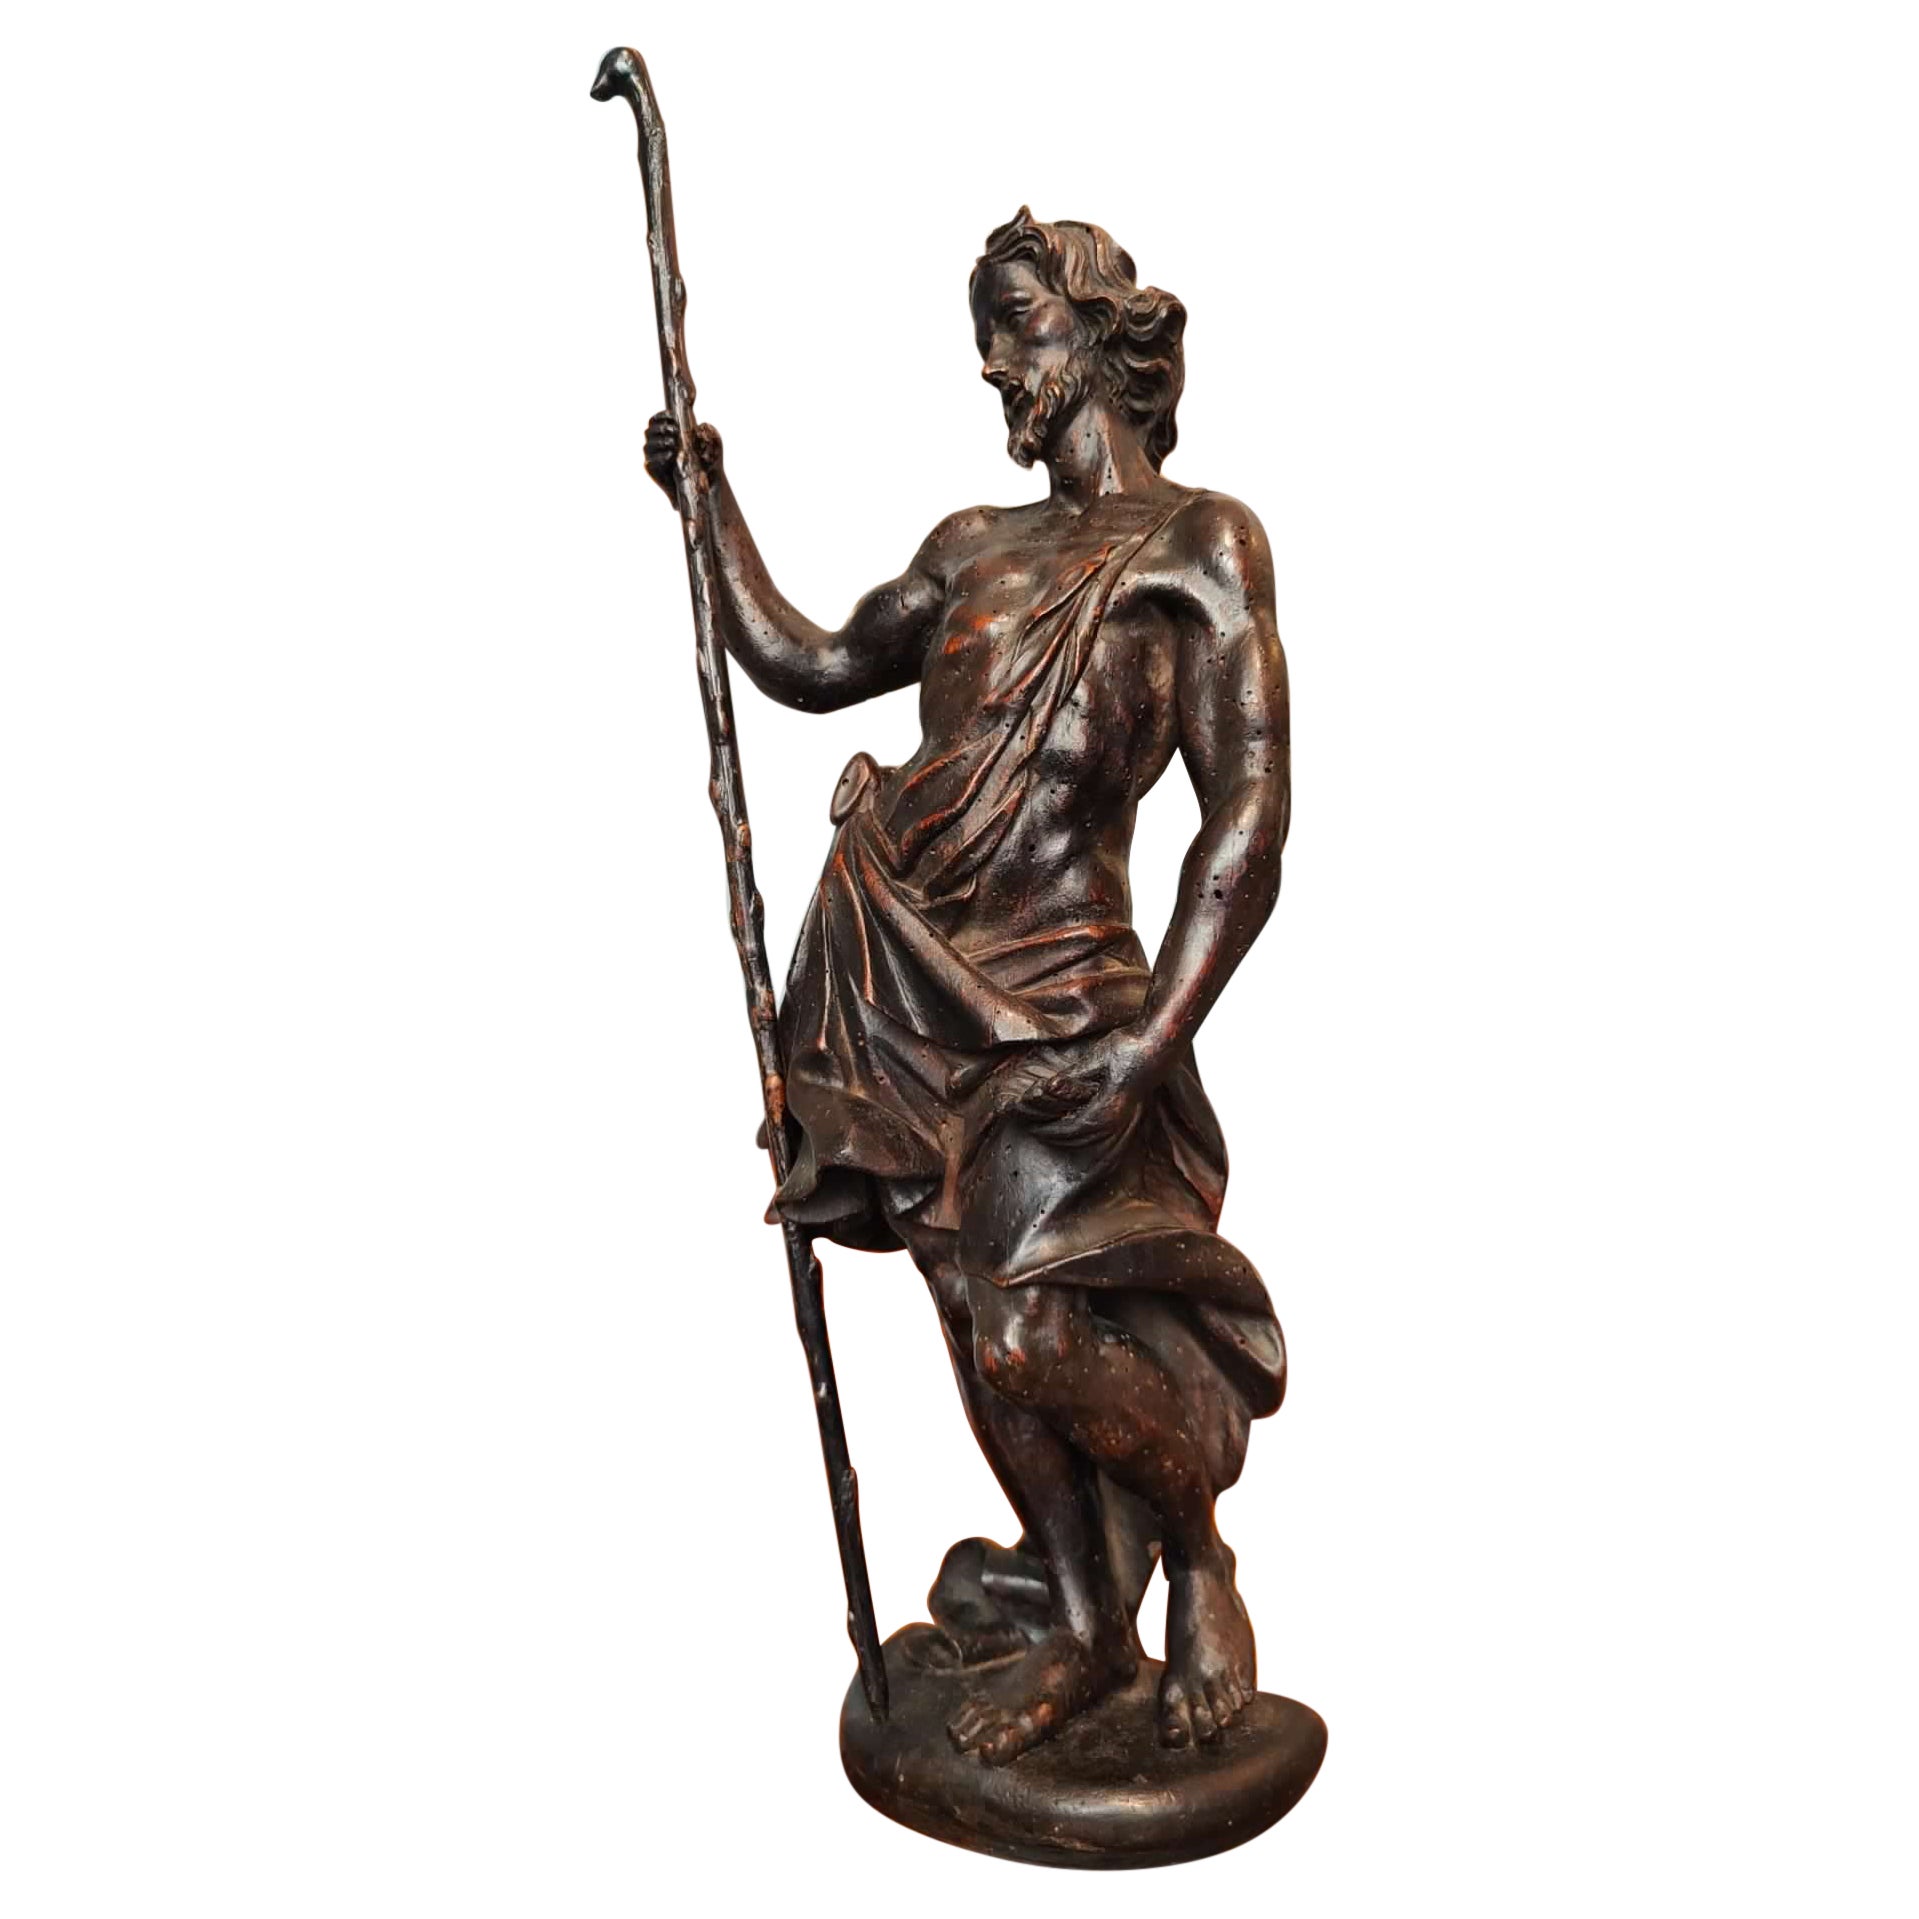 Sculpture depicting St. John the Baptist For Sale